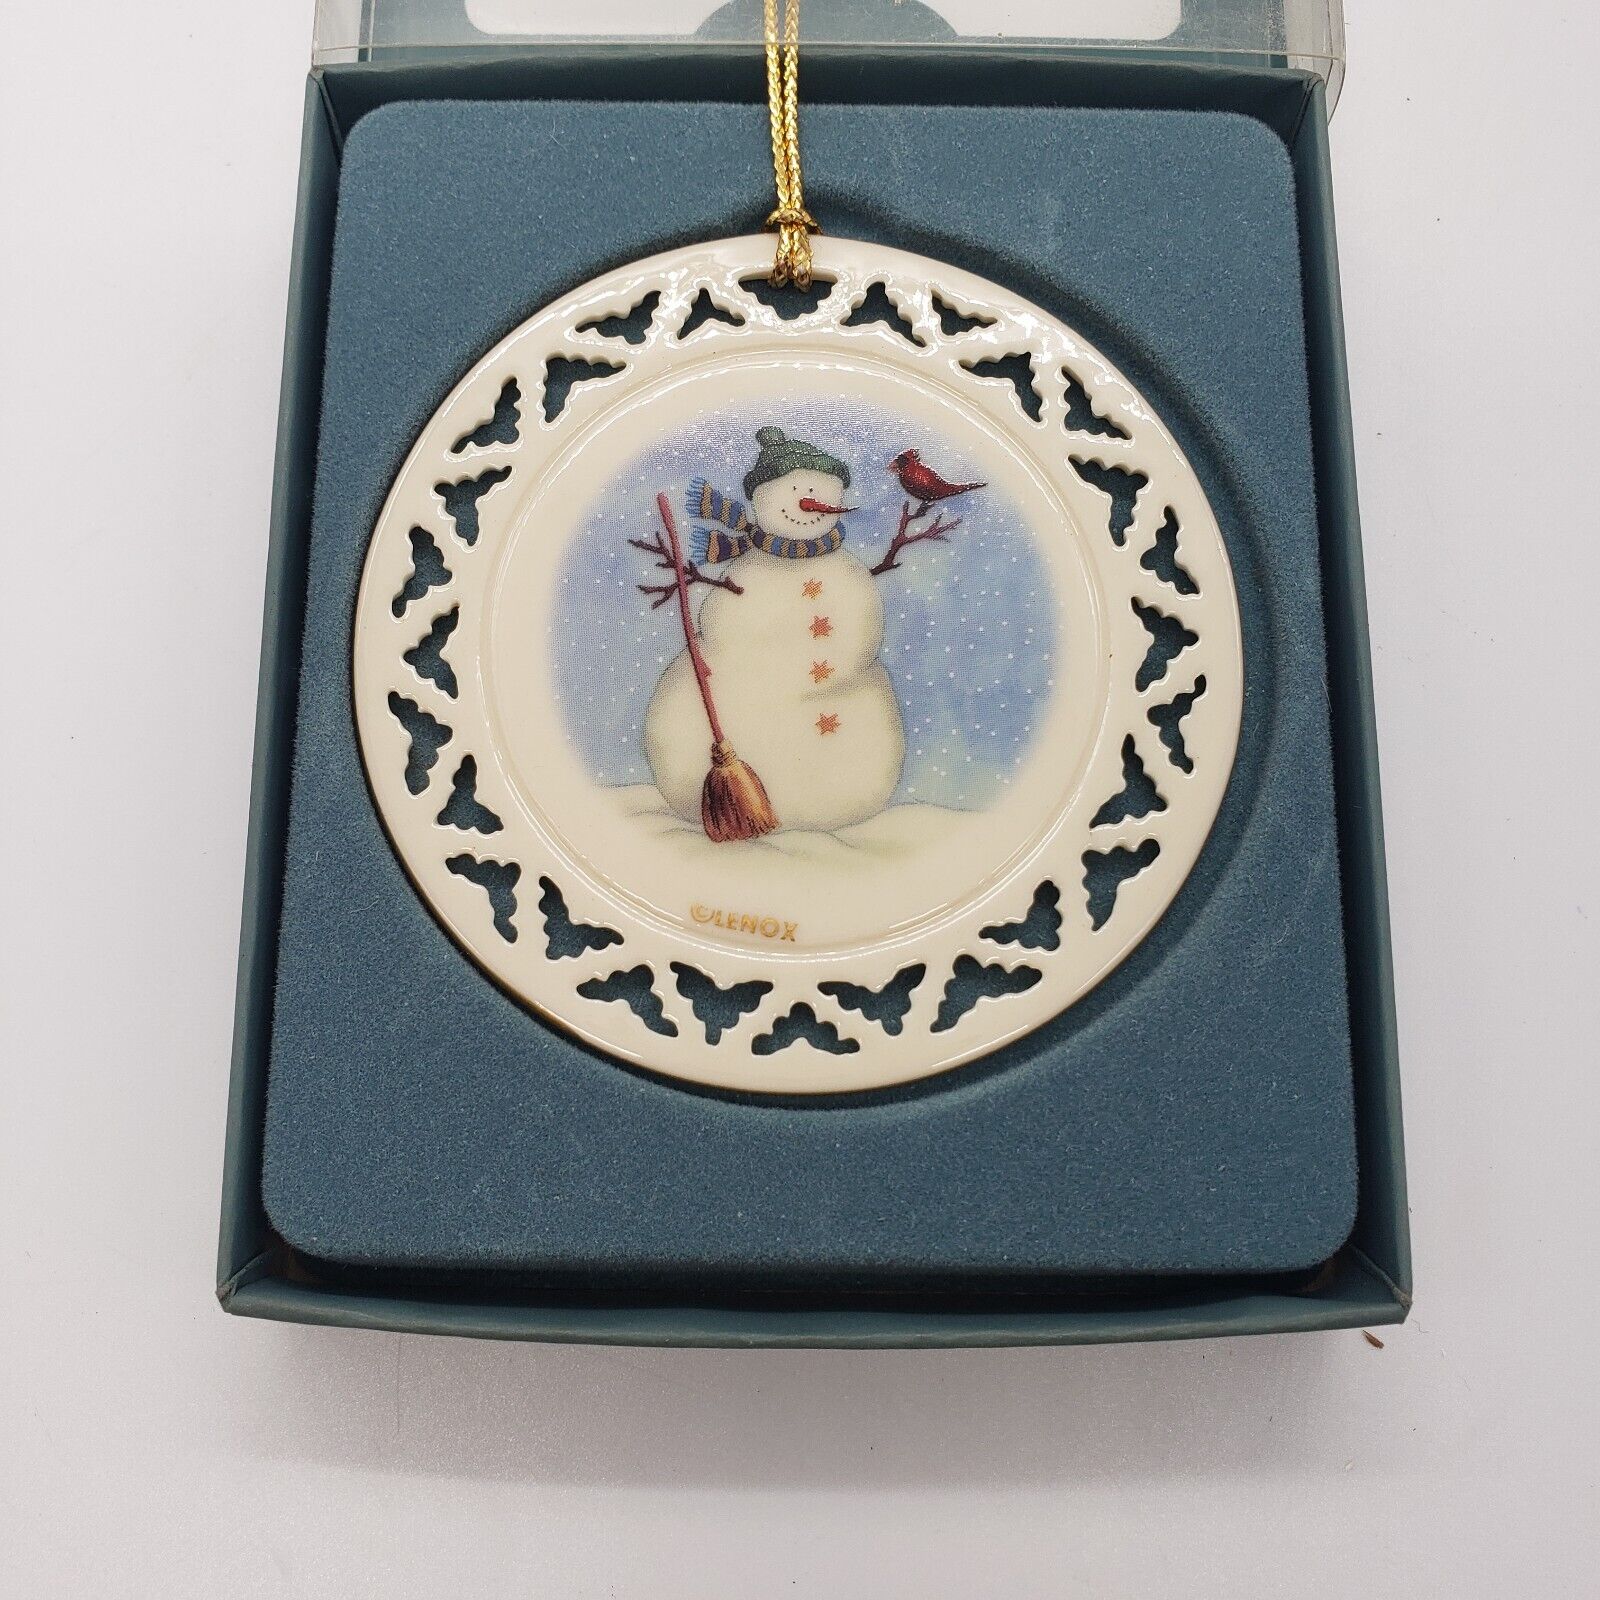 Lenox 2002 Annual Snowman Christmas Ornament 3.25